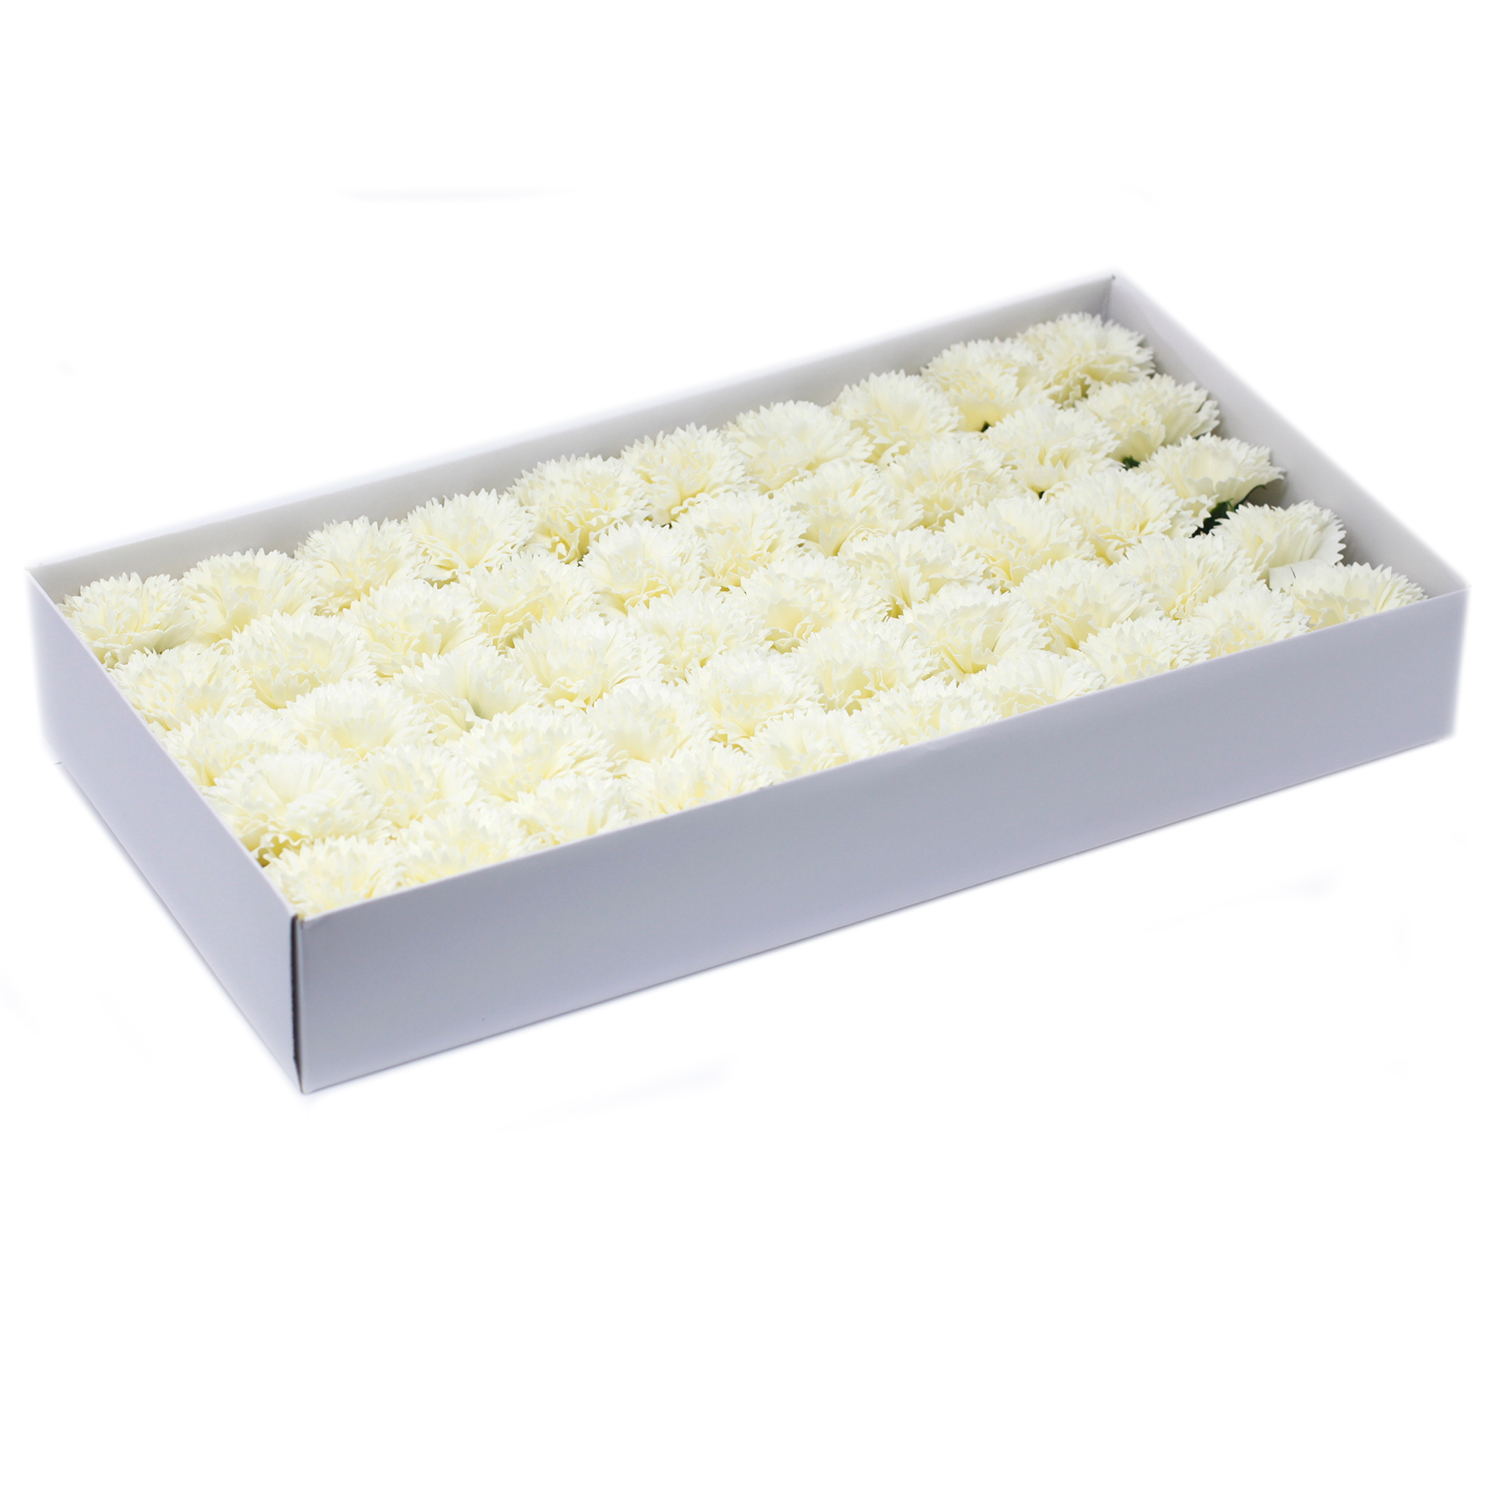 10 x Craft Soap Flowers - Carnations - Cream